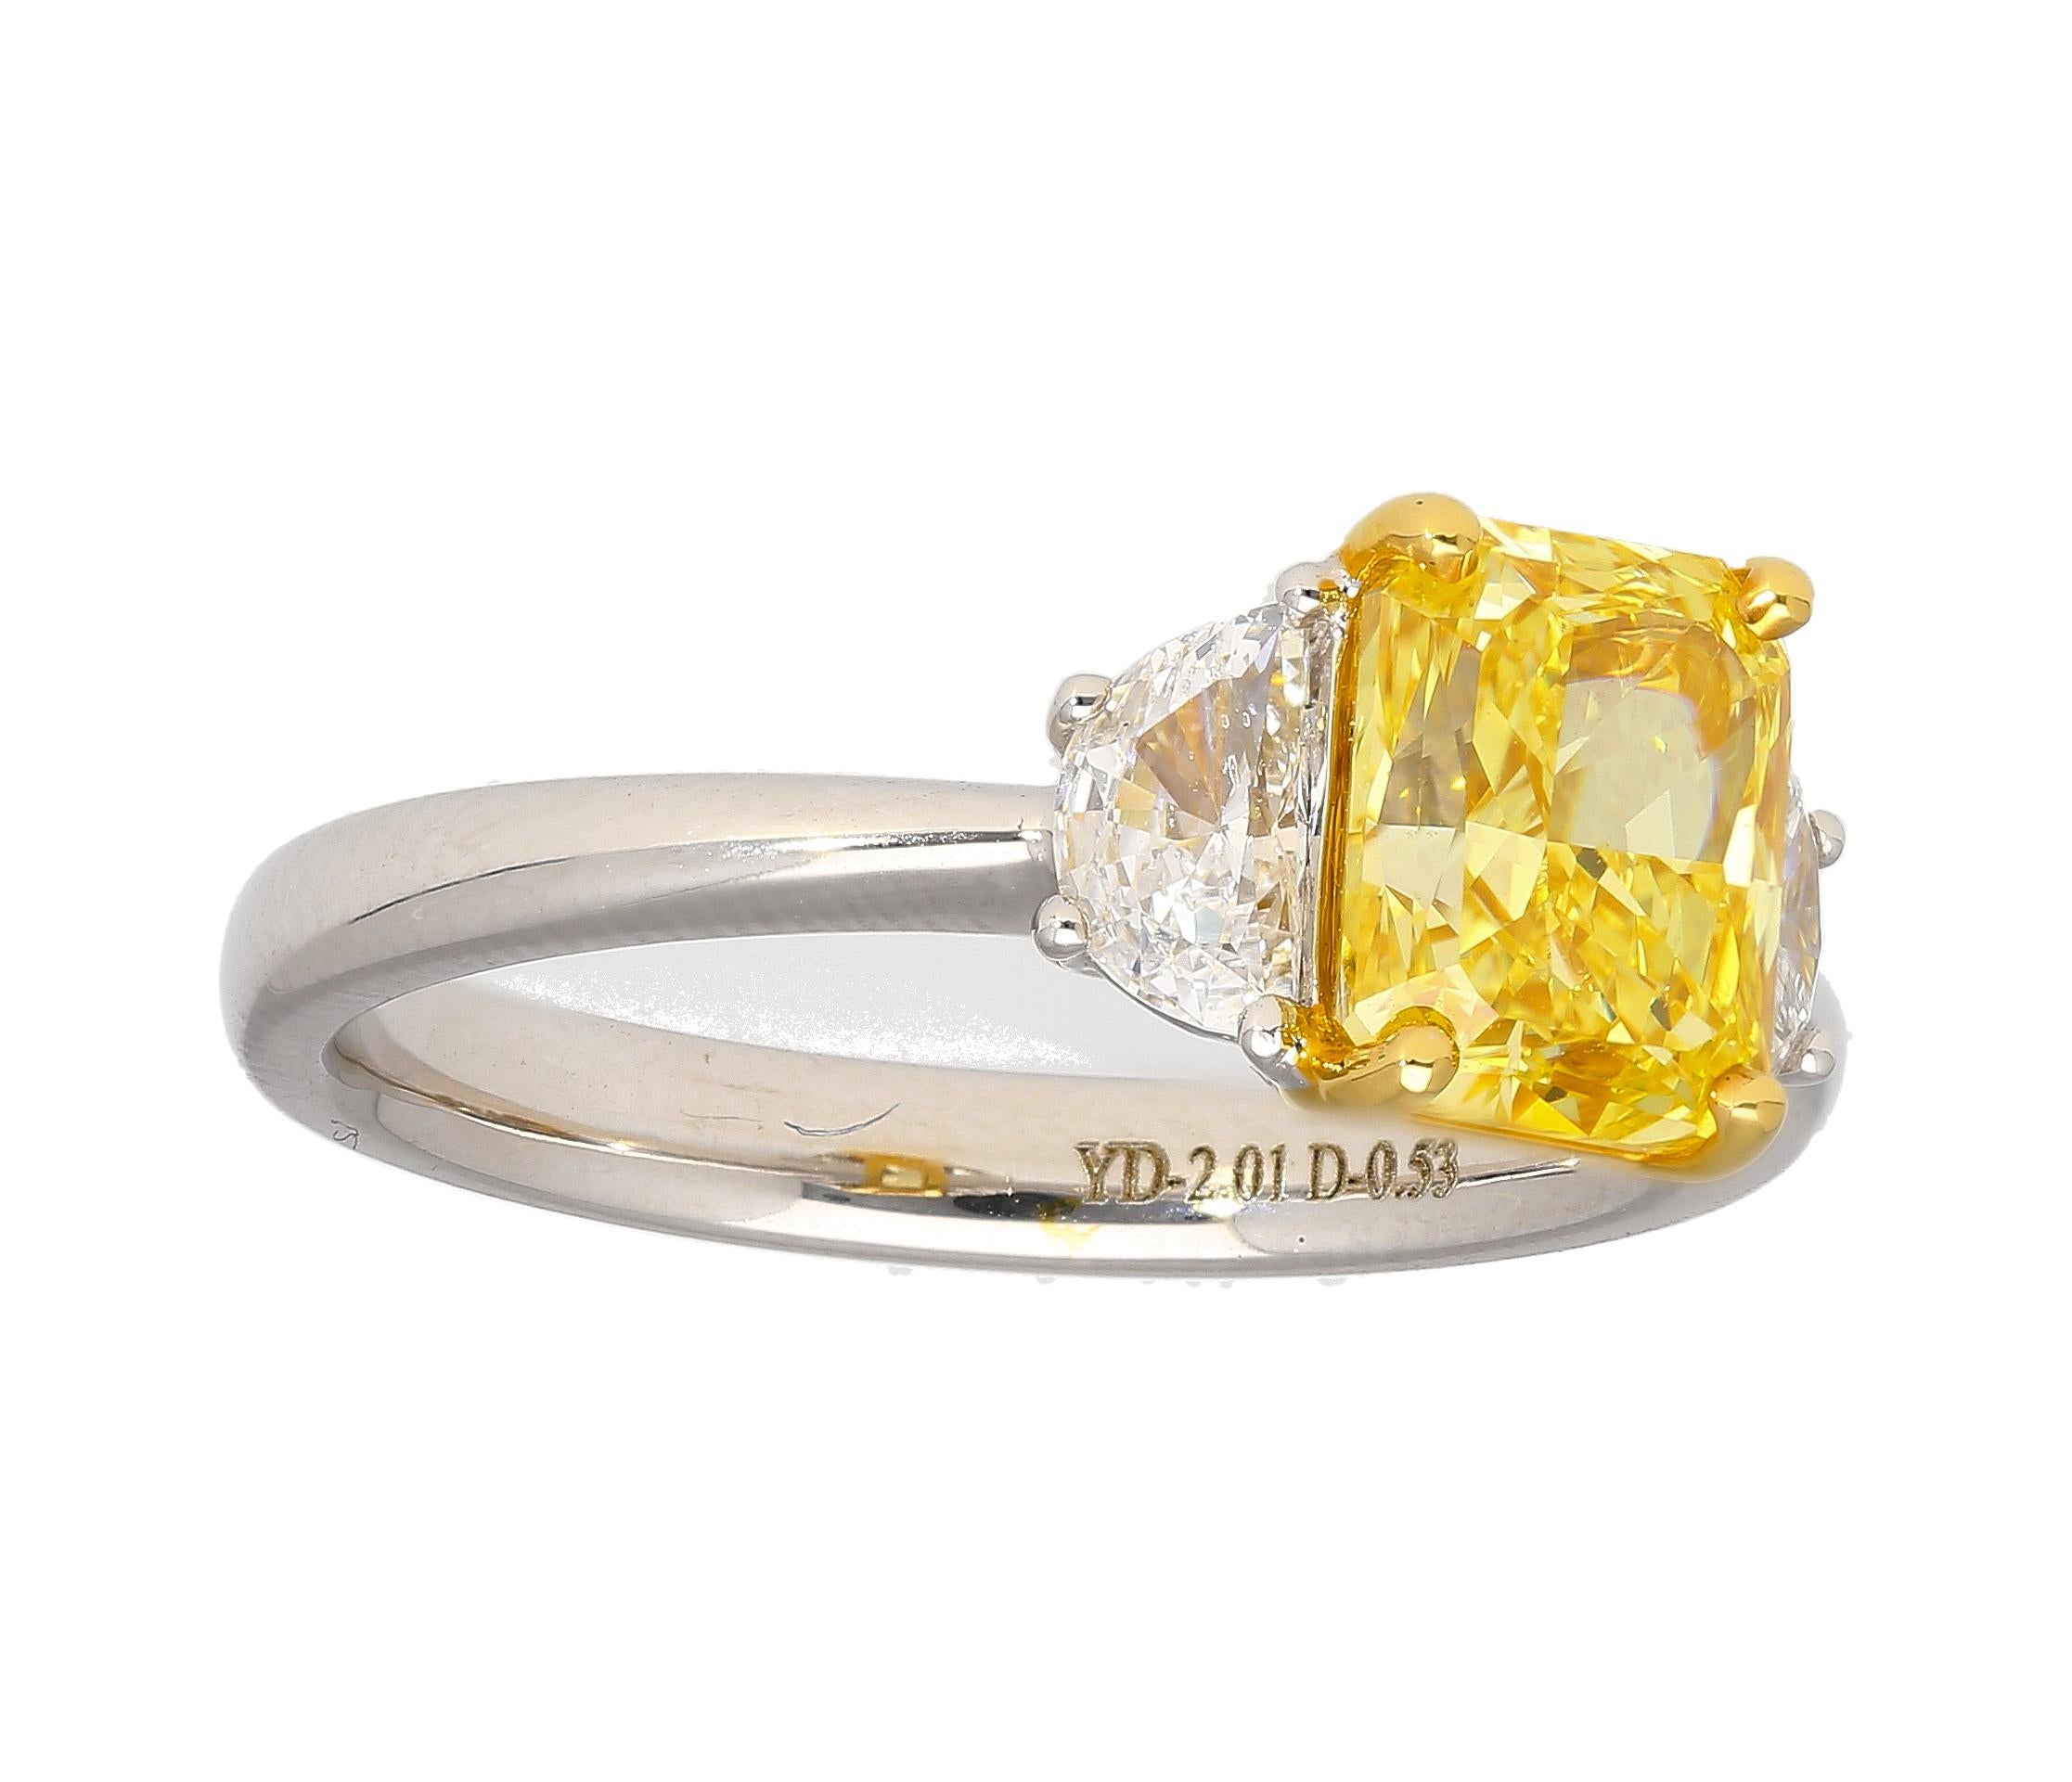 2 carat fancy yellow diamond price